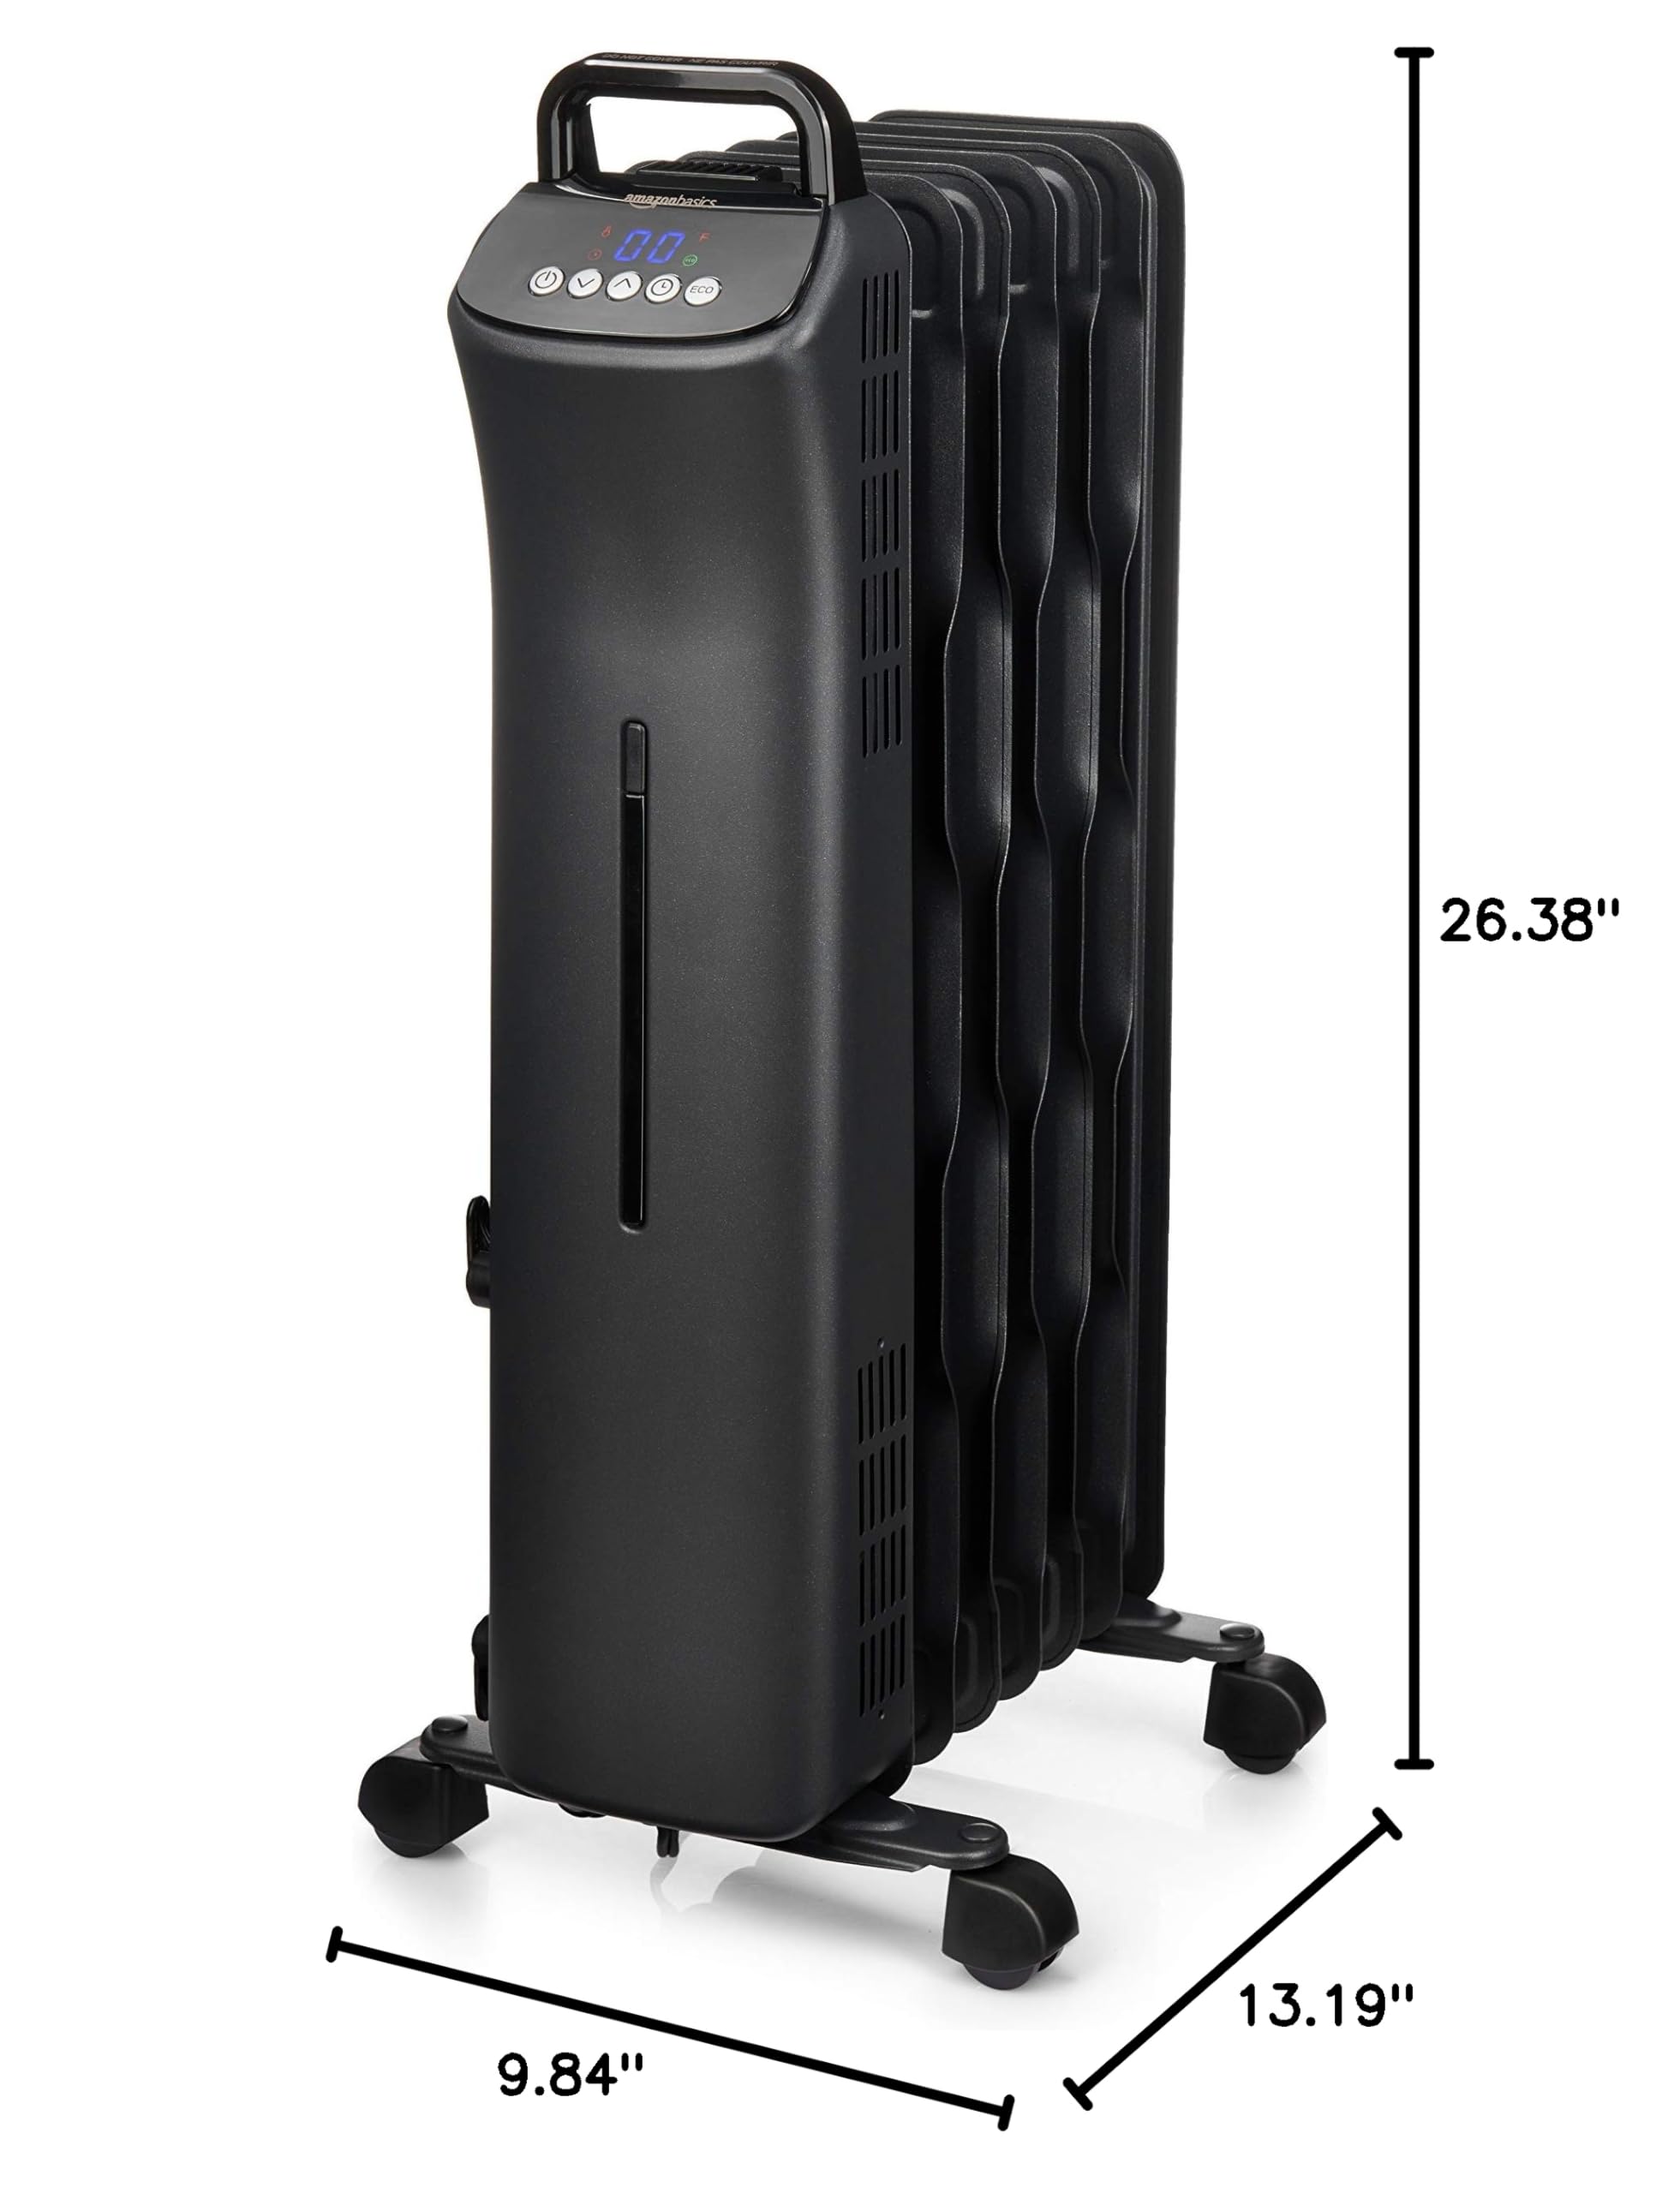 Amazon Basics Portable Digital Radiator Heater with 7 Wavy Fins and Remote Control, Black, 1500W, $30-31 Used AWD $31